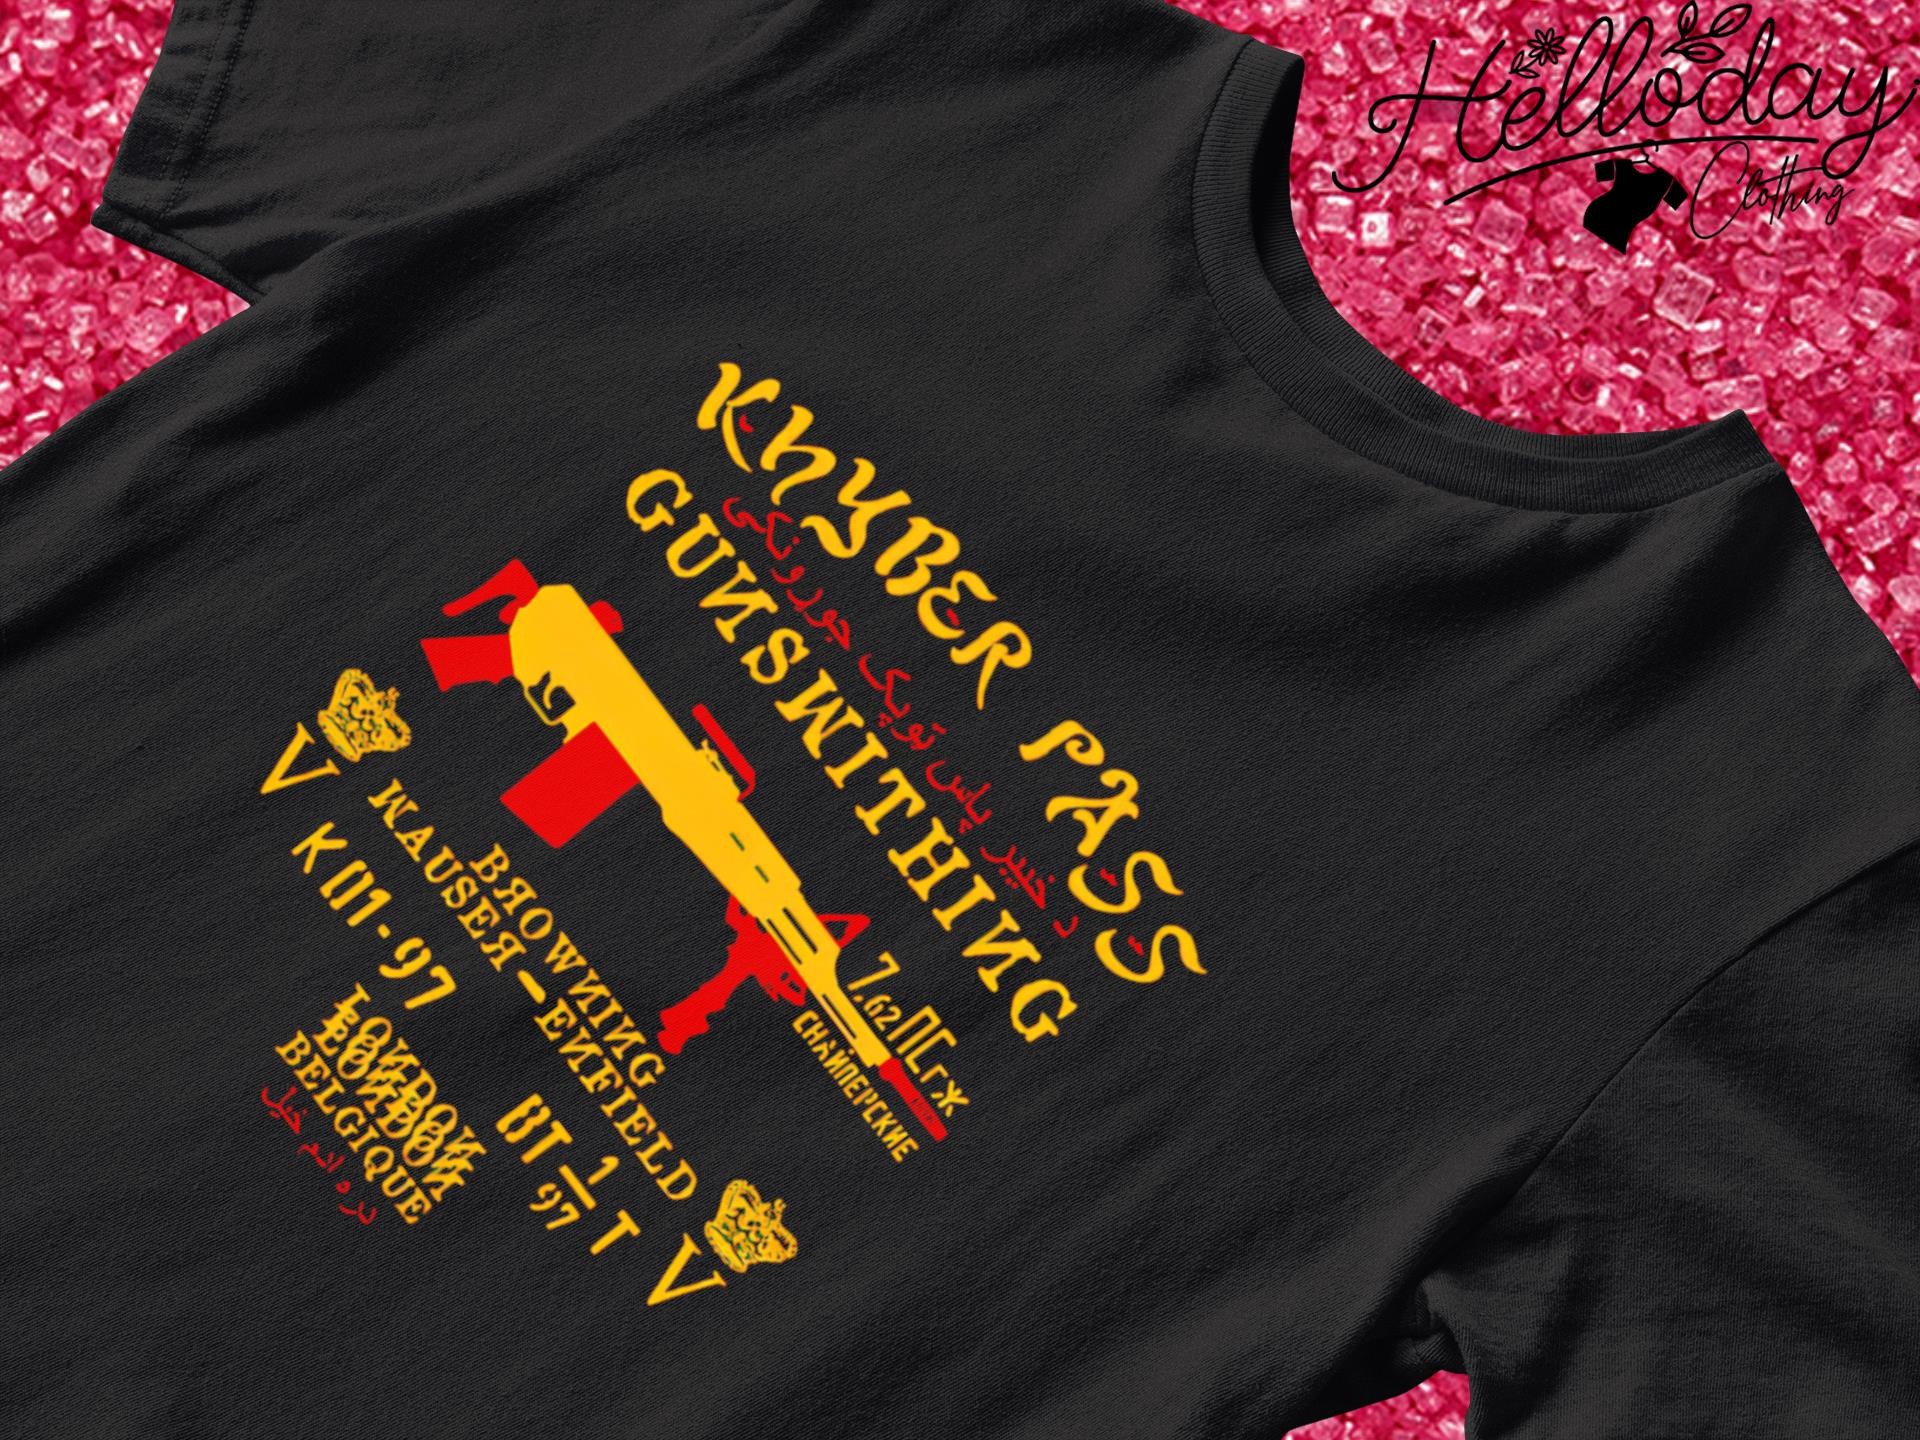 Khyber Pass Gunsmithing gun shirt